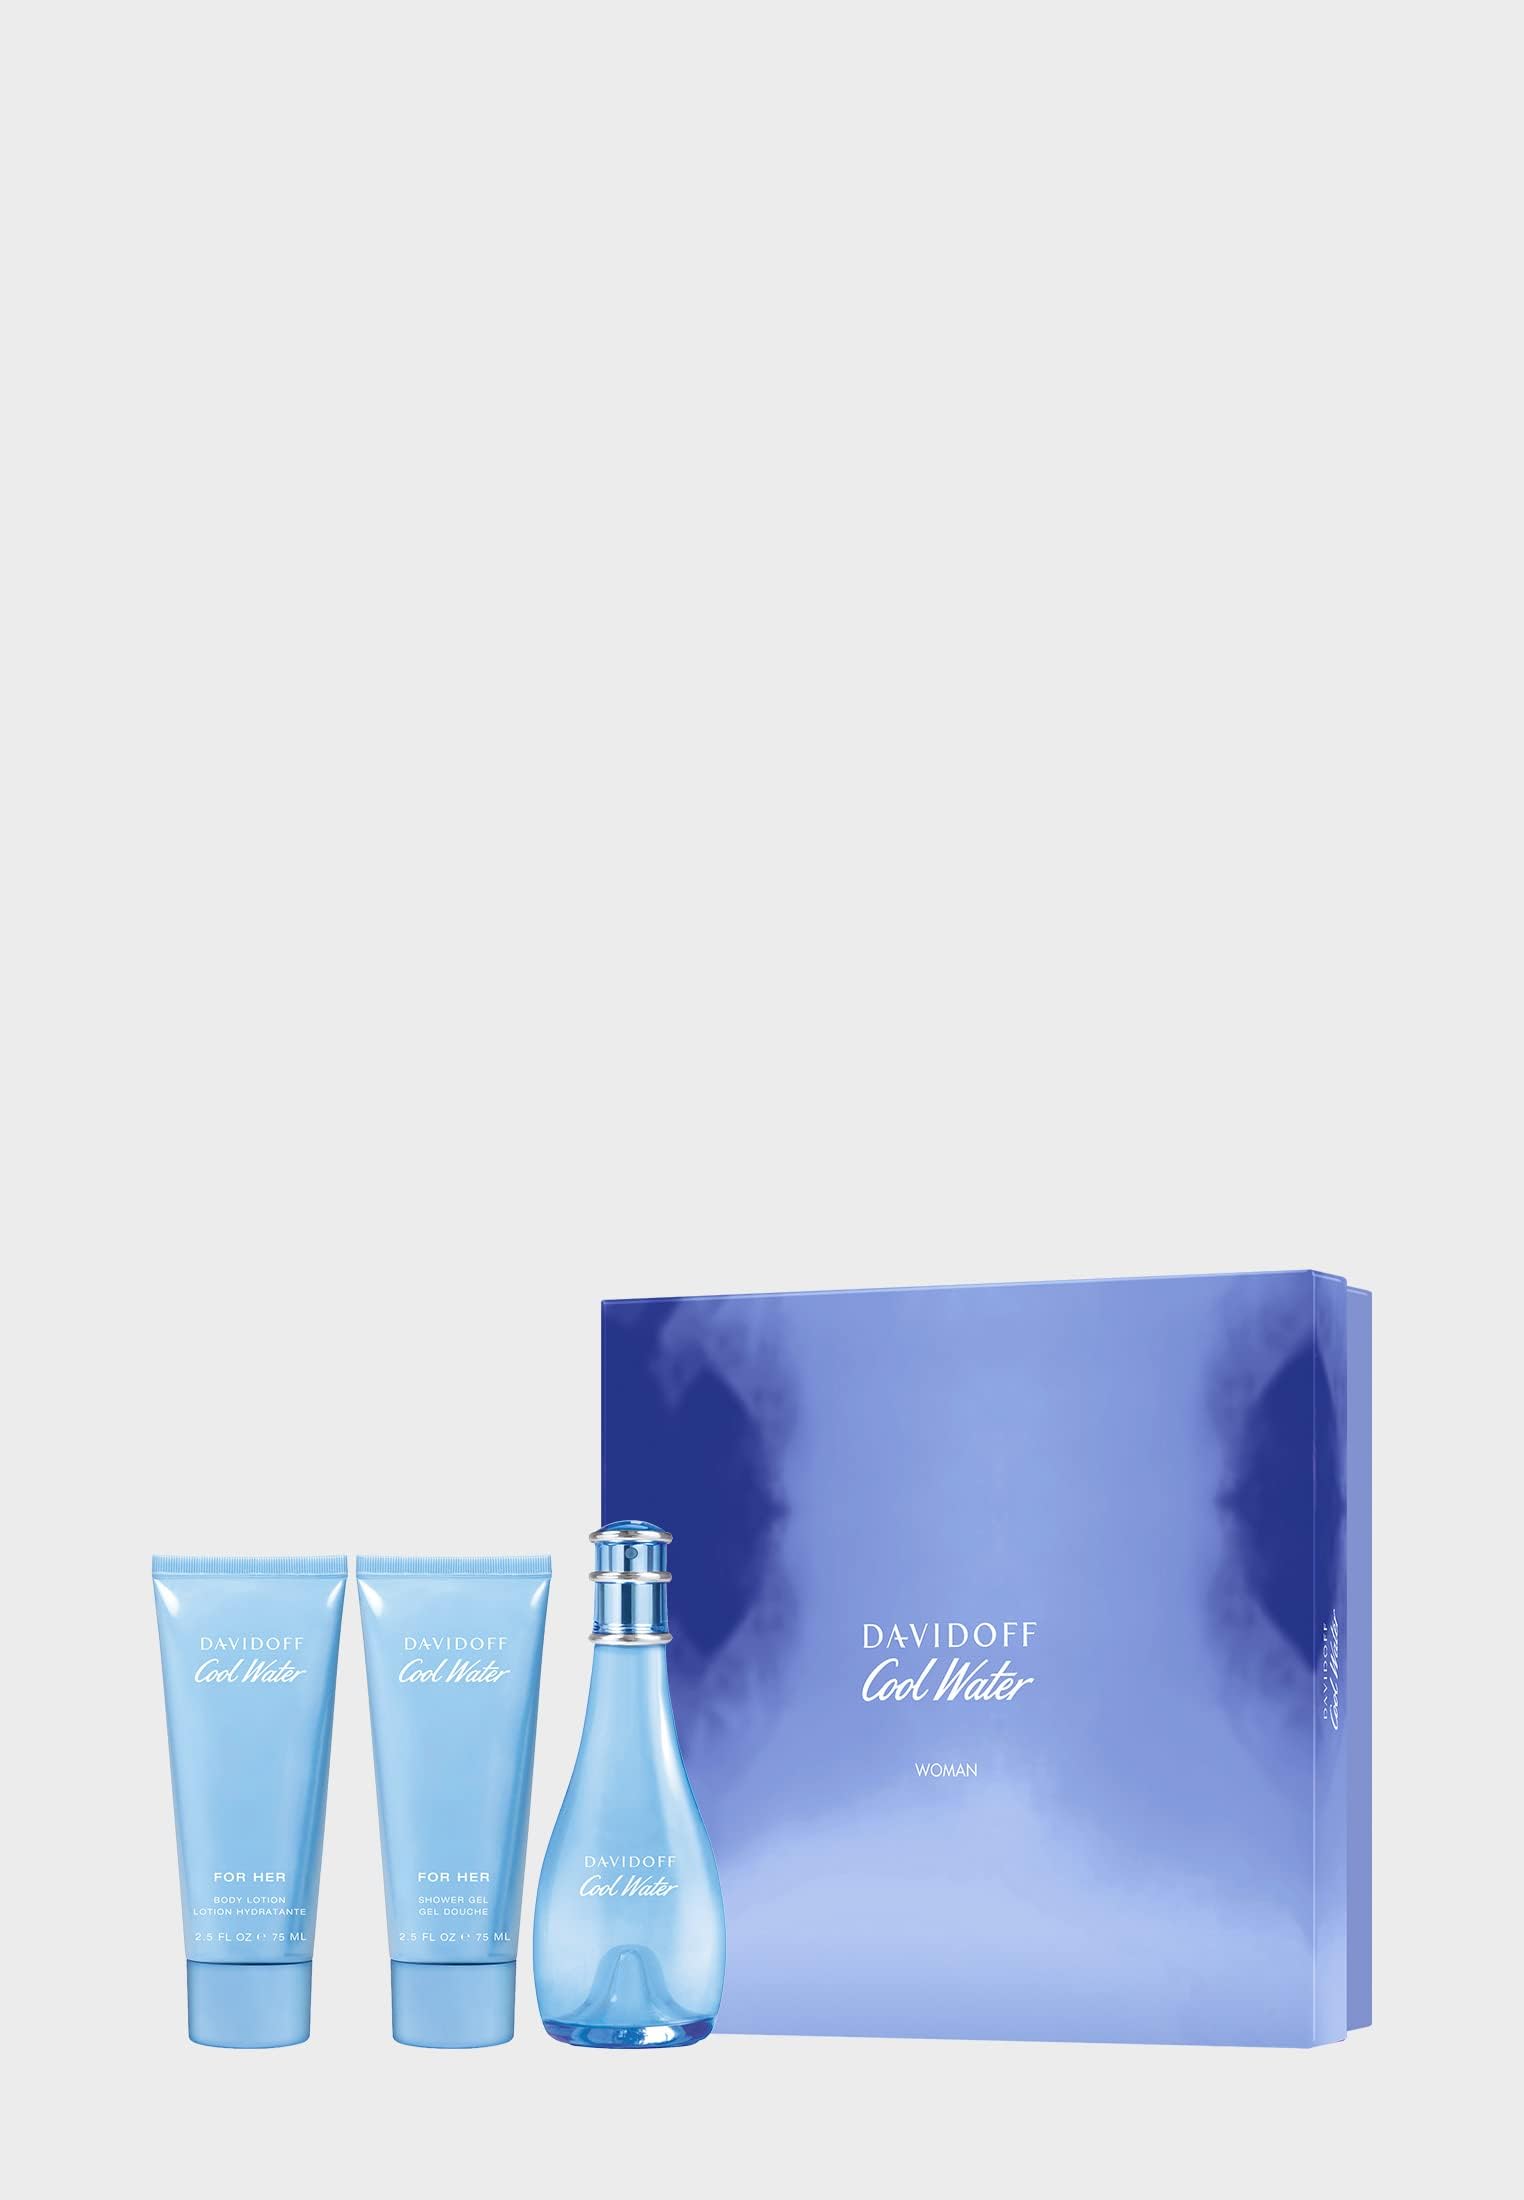 DAVIDOFF Cool Water for Women Perfume Gift Set